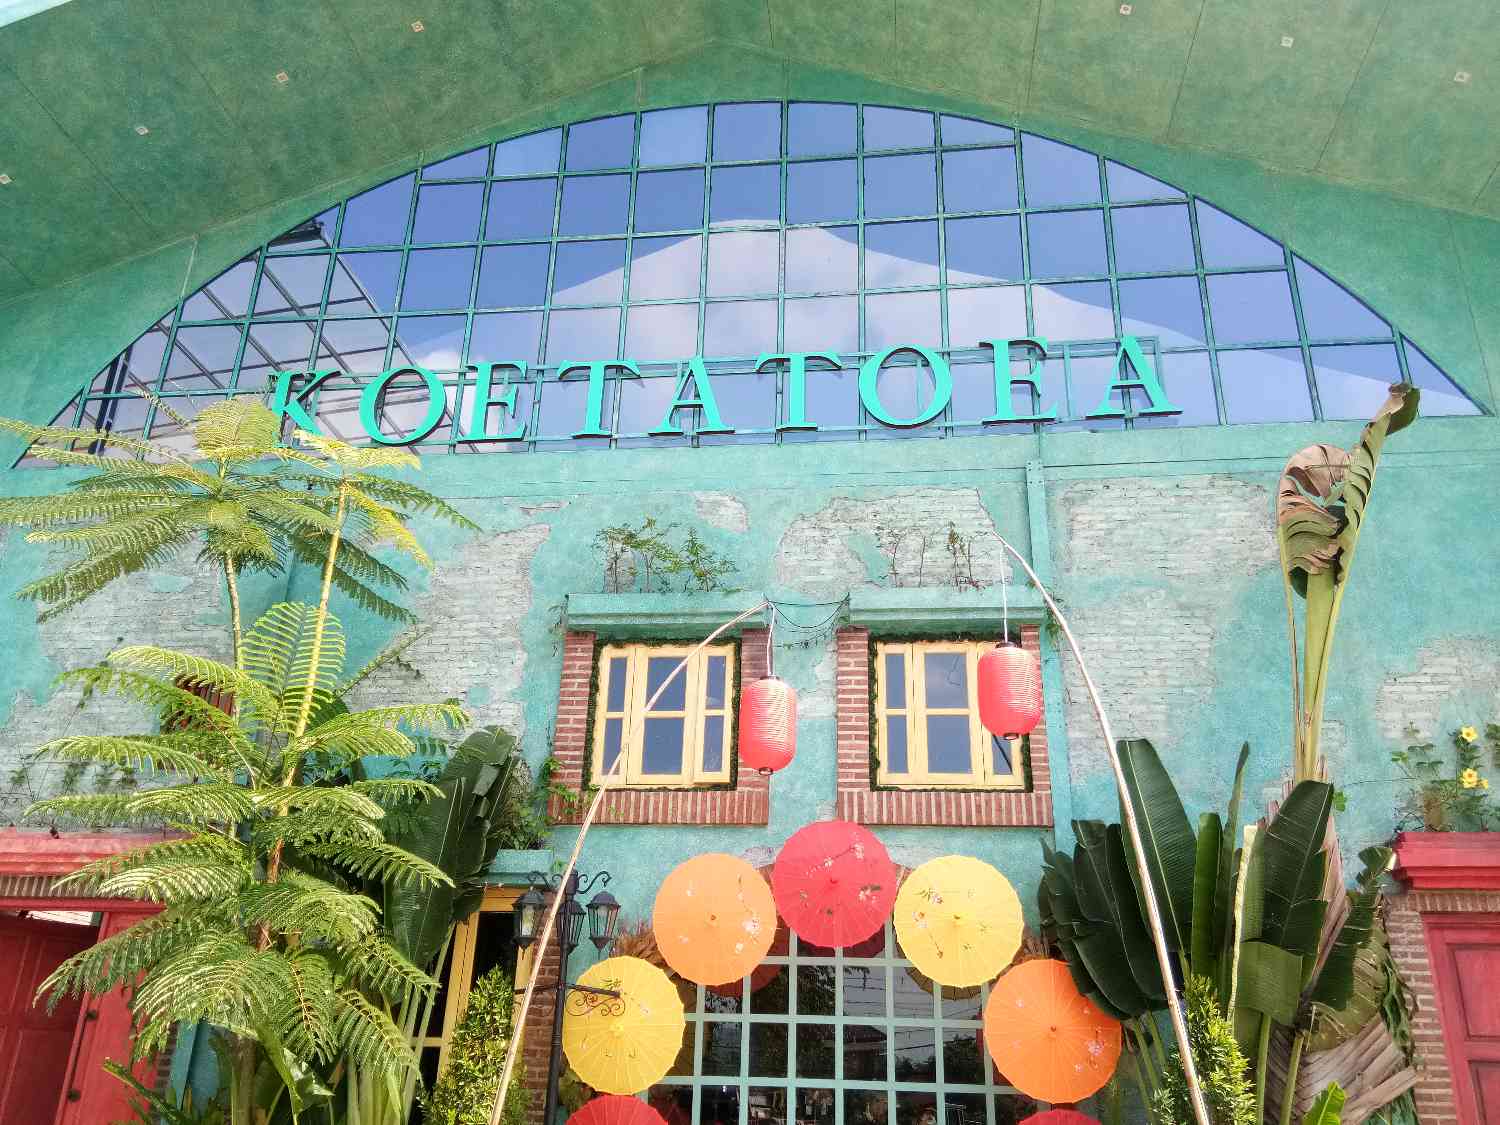 Dekorasi penuh warna di objek wisata Koeta Toea